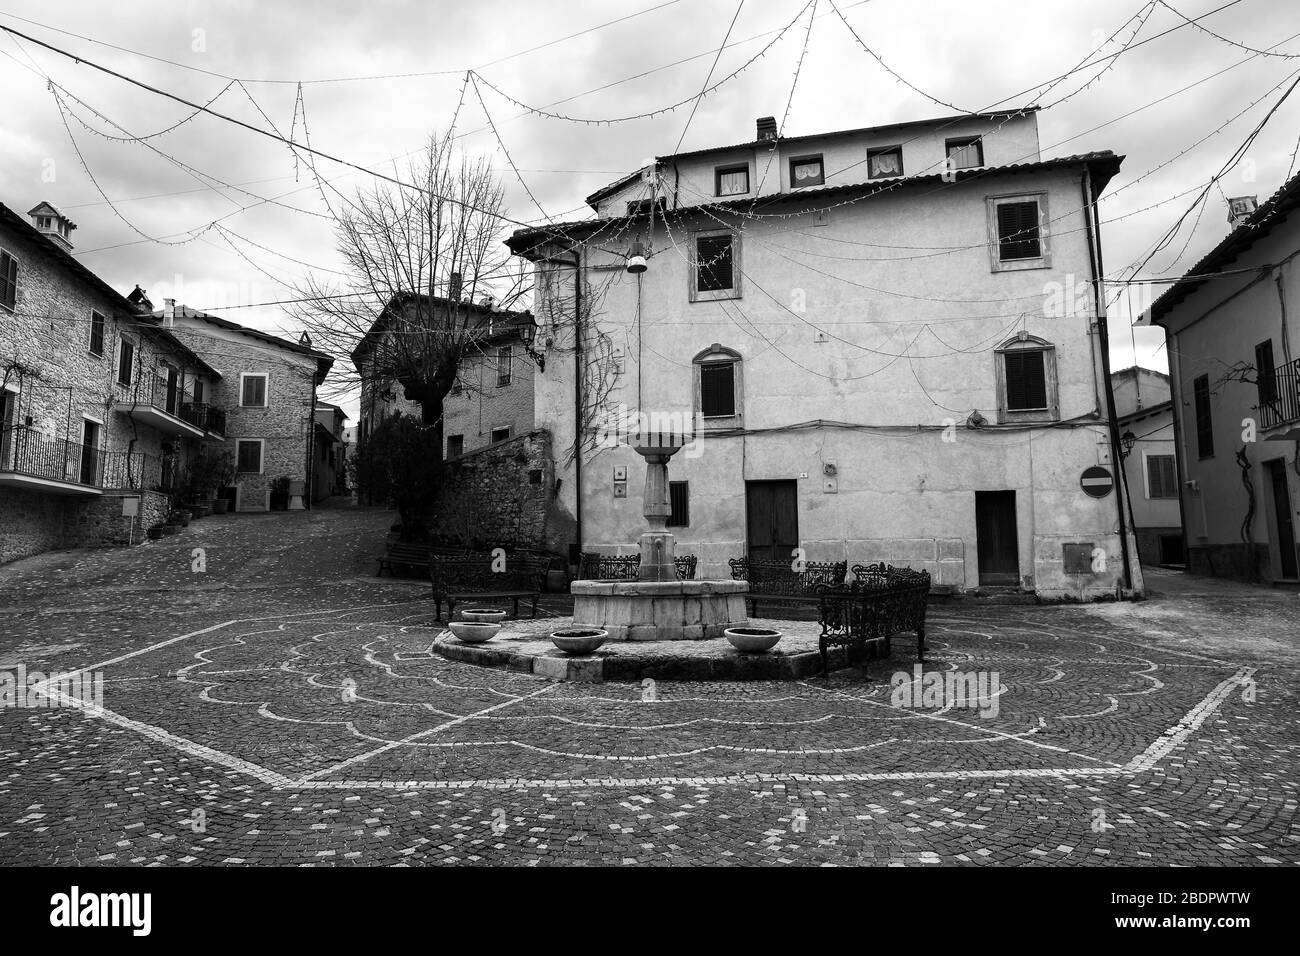 Colle di Tora, Latium, Italien: Brunnen auf dem zentralen Platz des alten Dorfes Colle di Tora Stockfoto